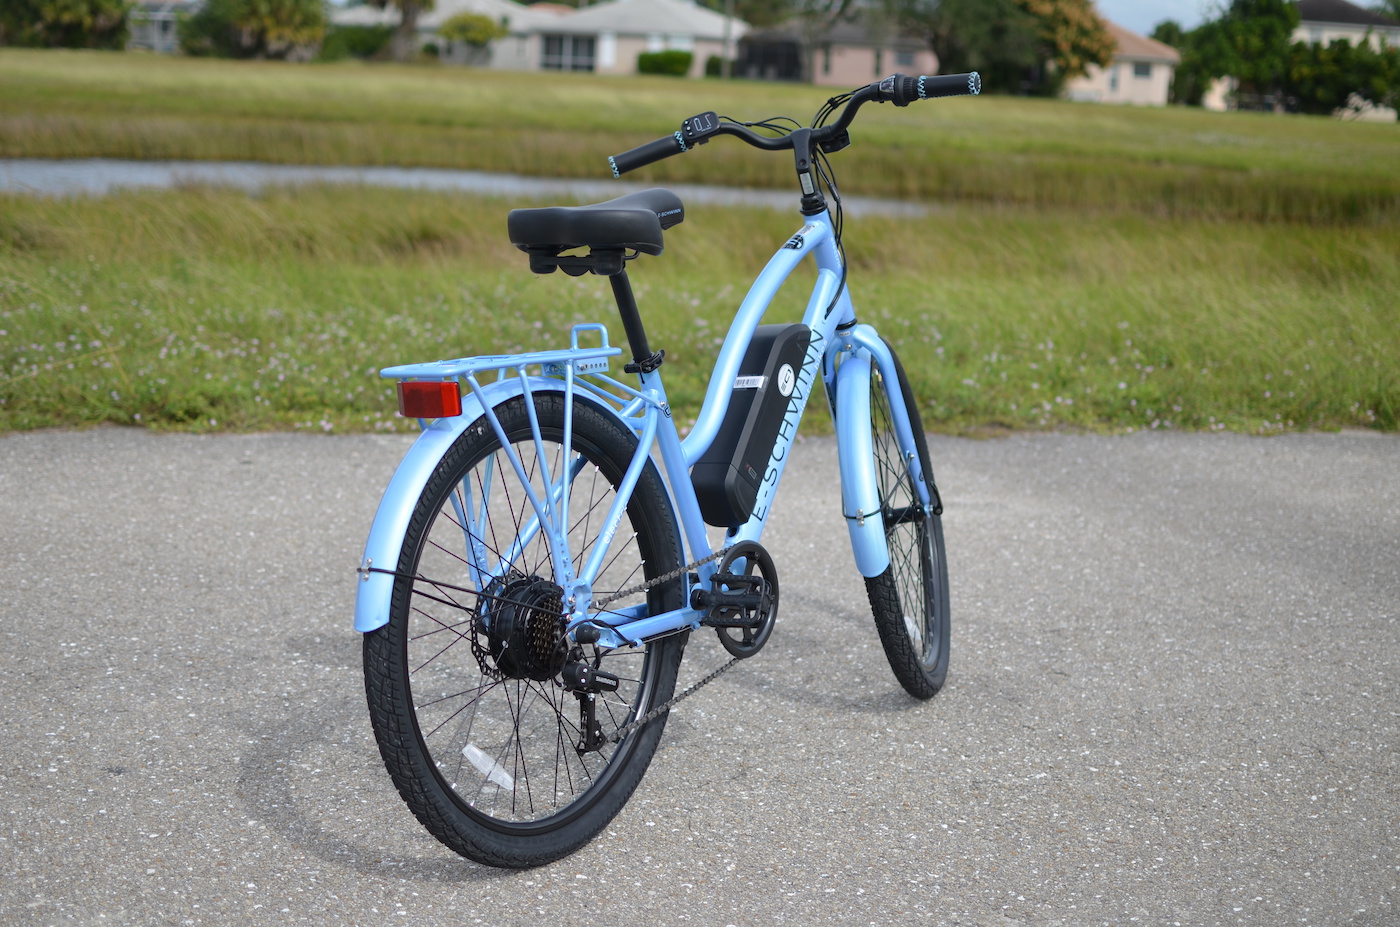 Schwinn EC1 electric bicycle review a fun and comfortable ecruiser!